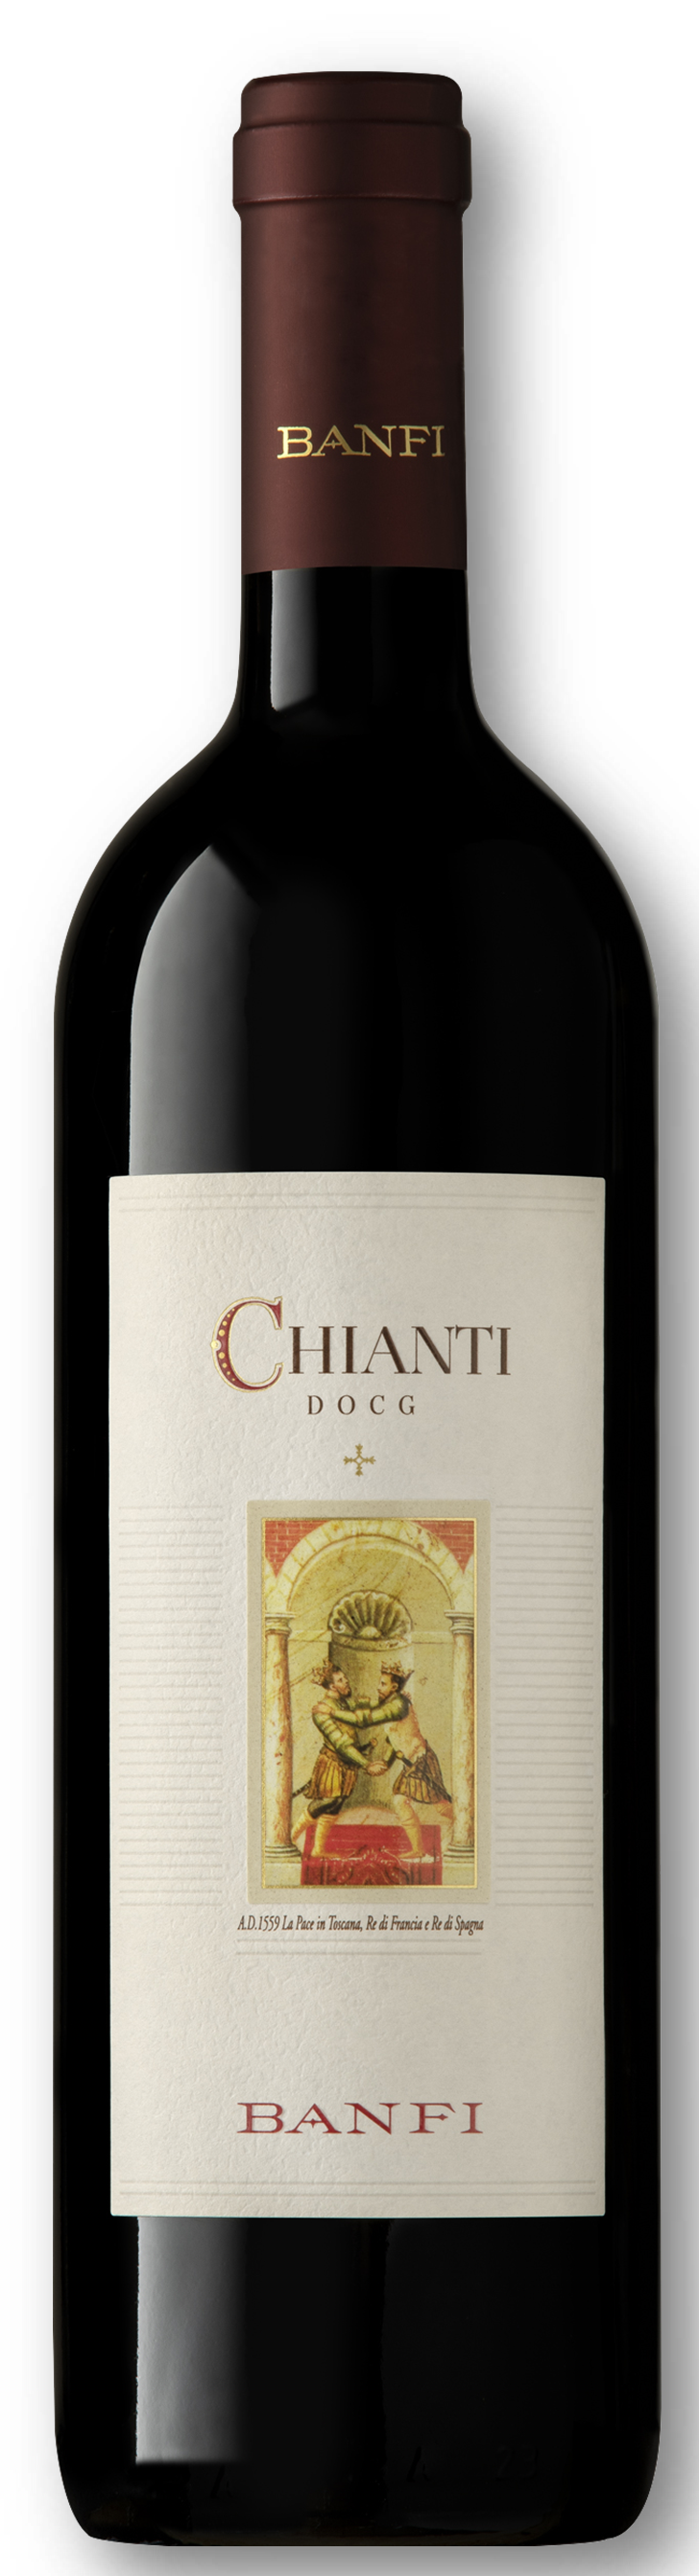 Italia aus 0,75l Chianti | - Vino Banfi 13% - Rotwein Toskana DOCG 2021 |